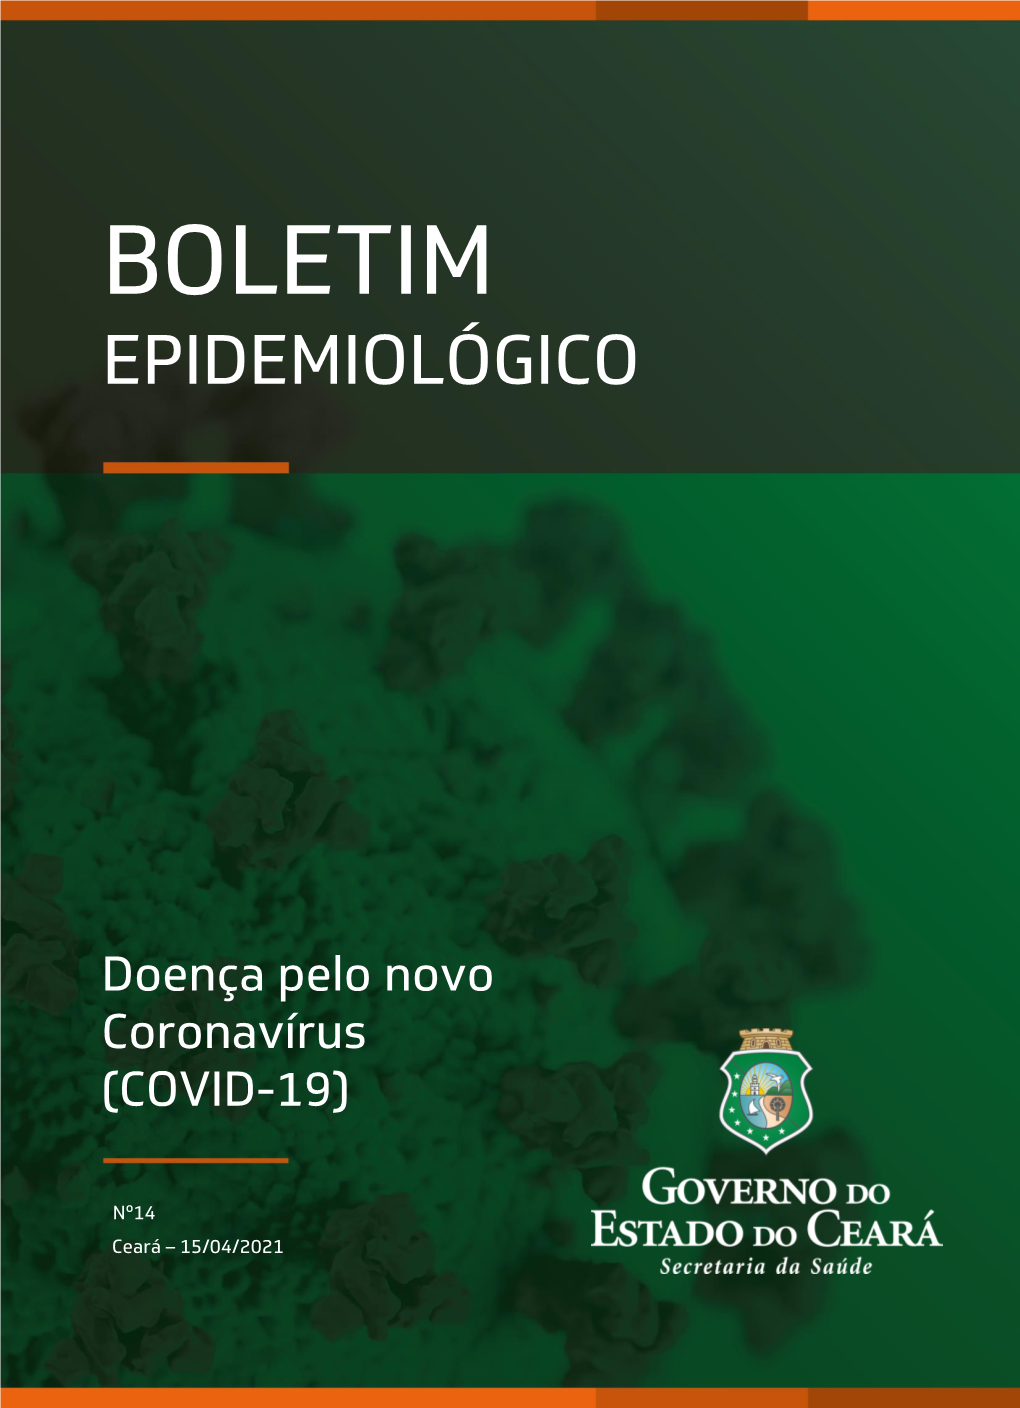 Boletim Epidemiológico Covid-19